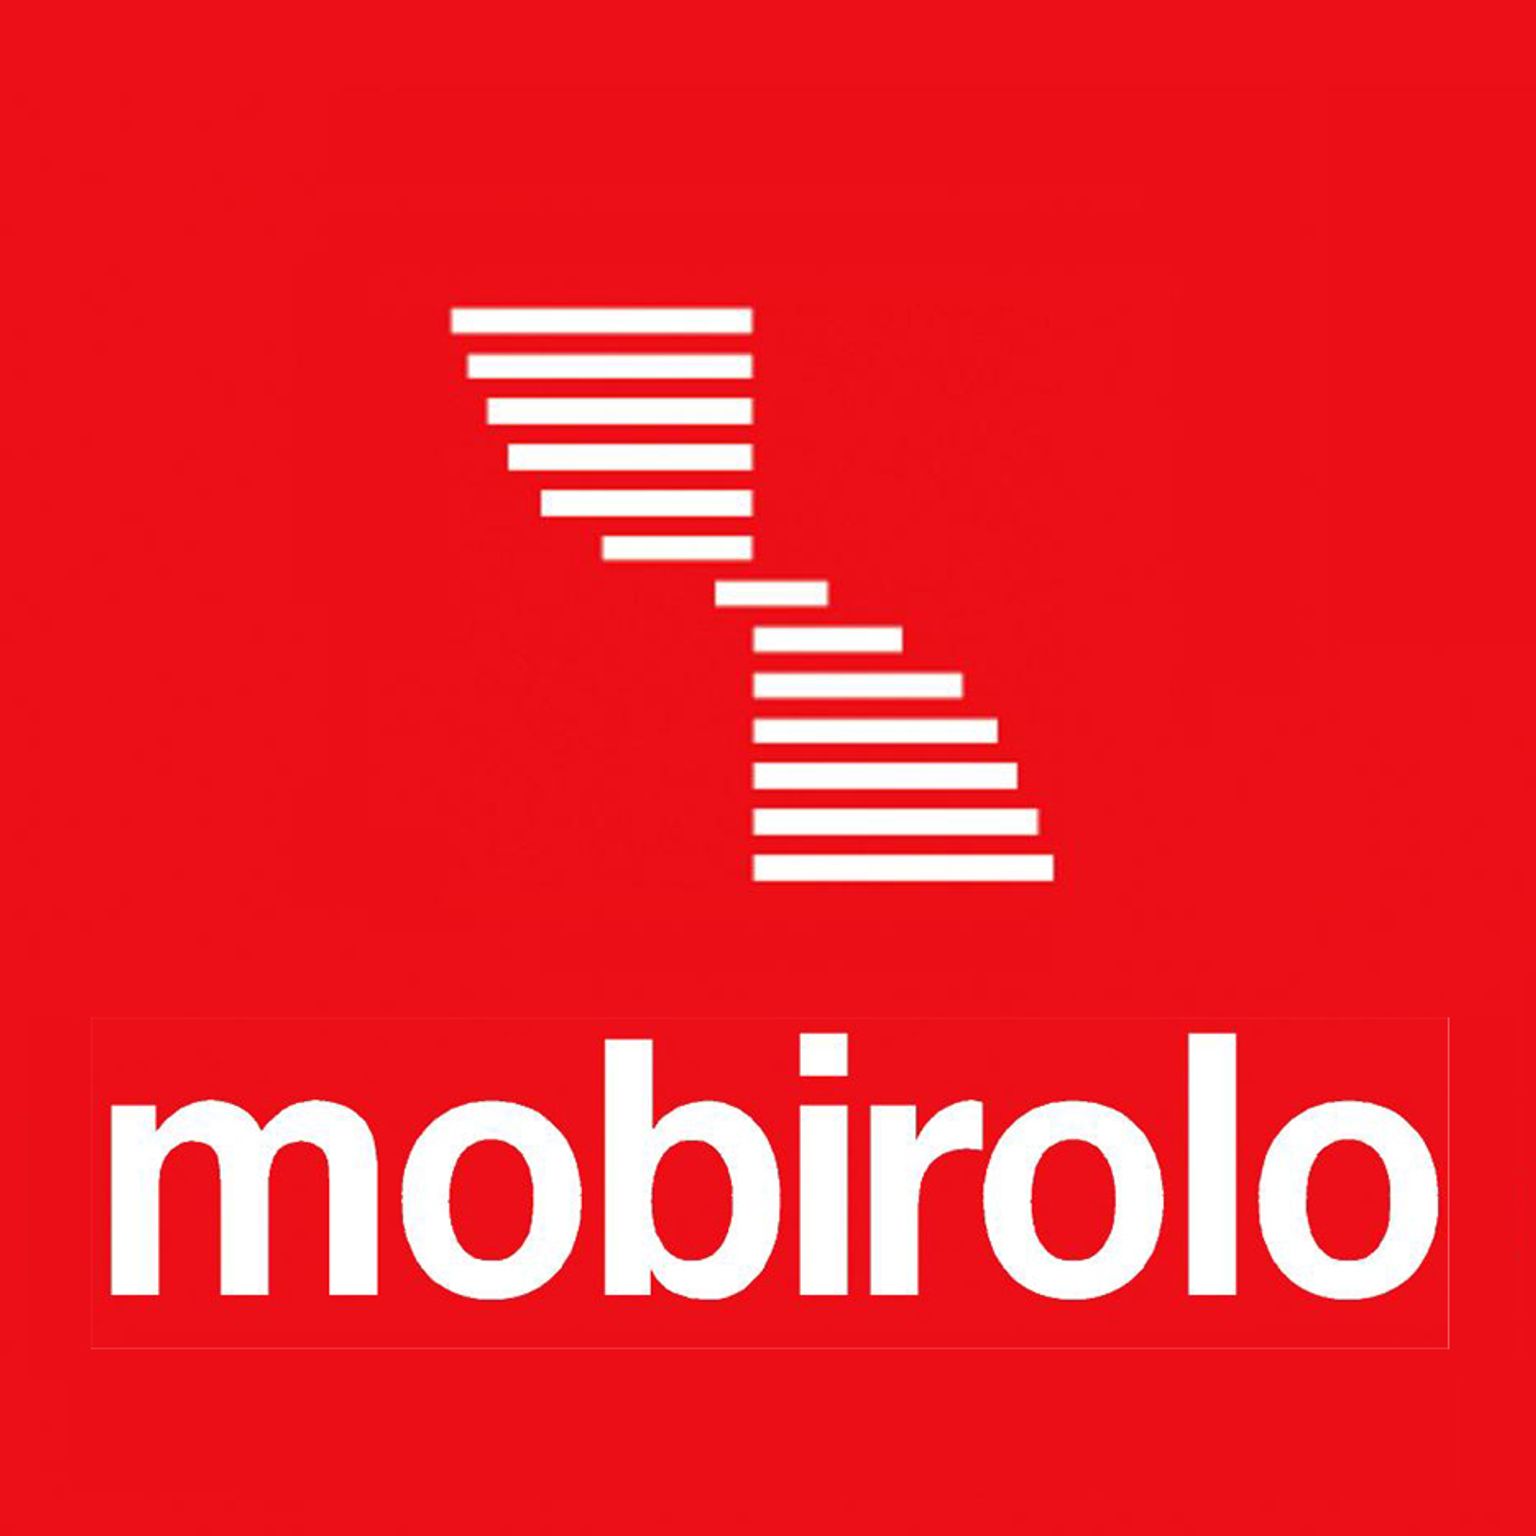 Mobirolo